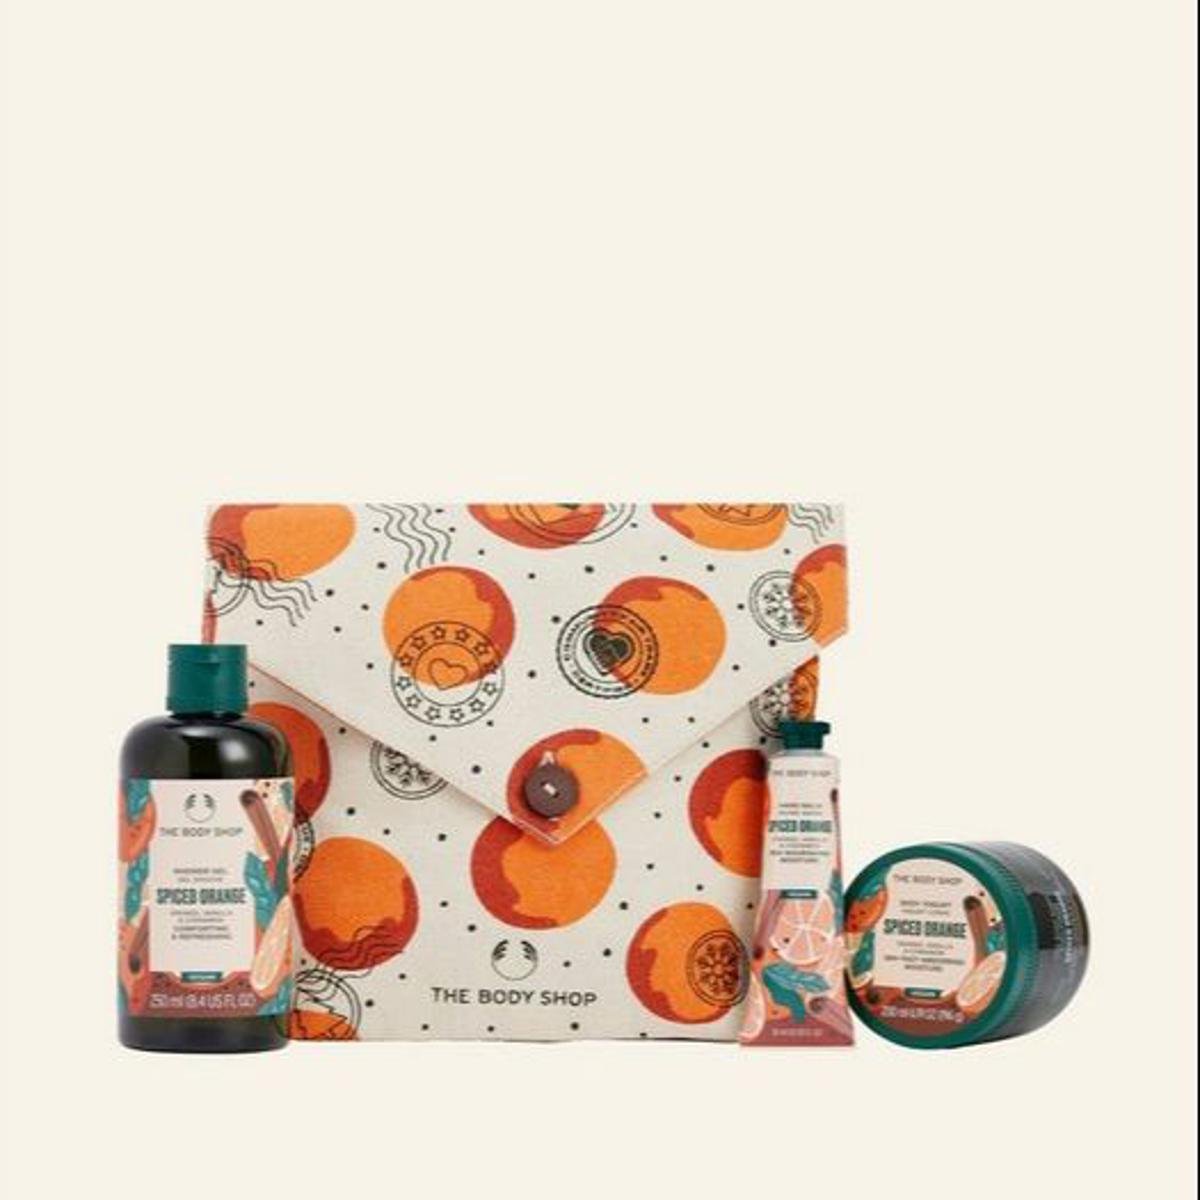 The Body Shop Oranges & Stockings Spiced Orange Essentials Gift